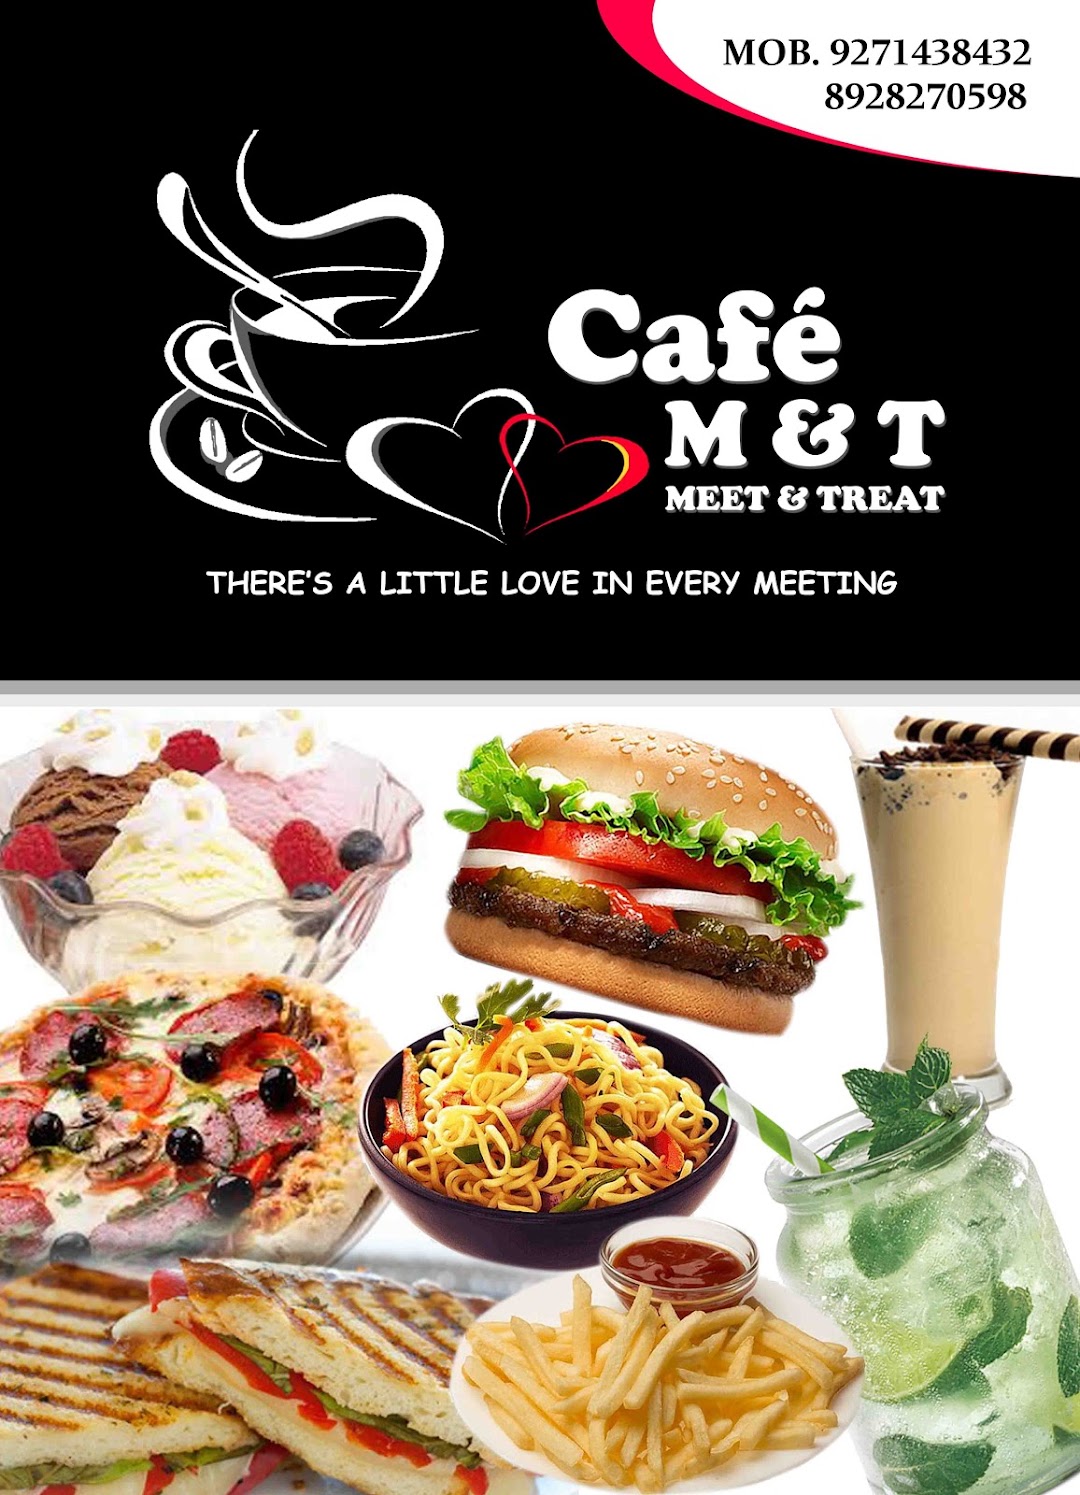 Café M&T (Meet And Treat)